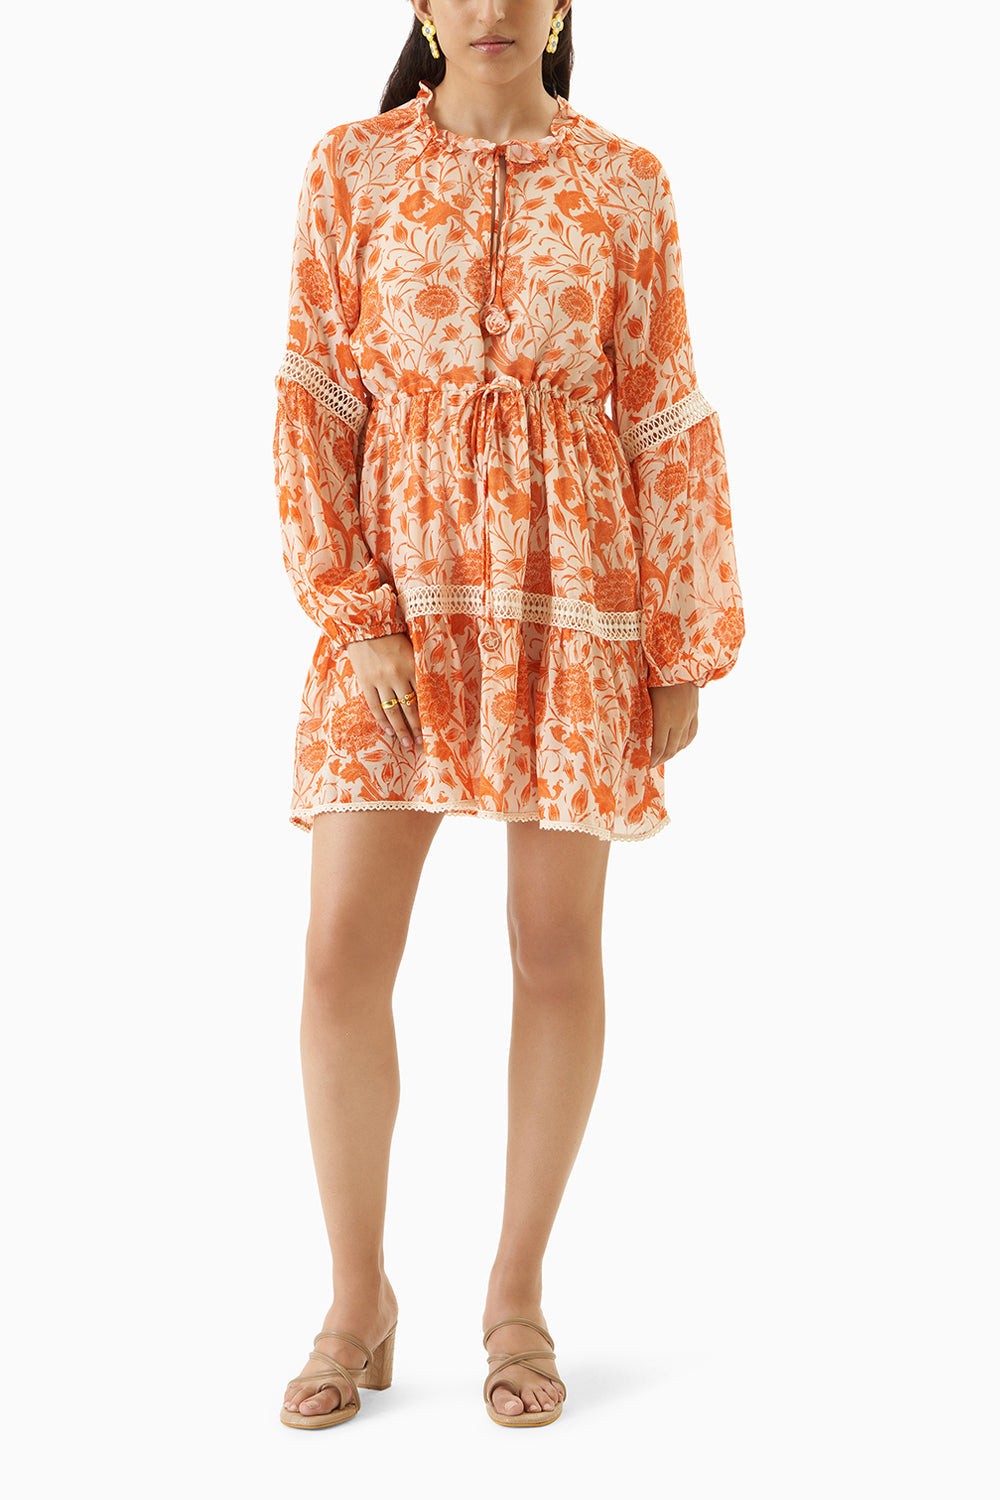 Tangerine Printed Dress